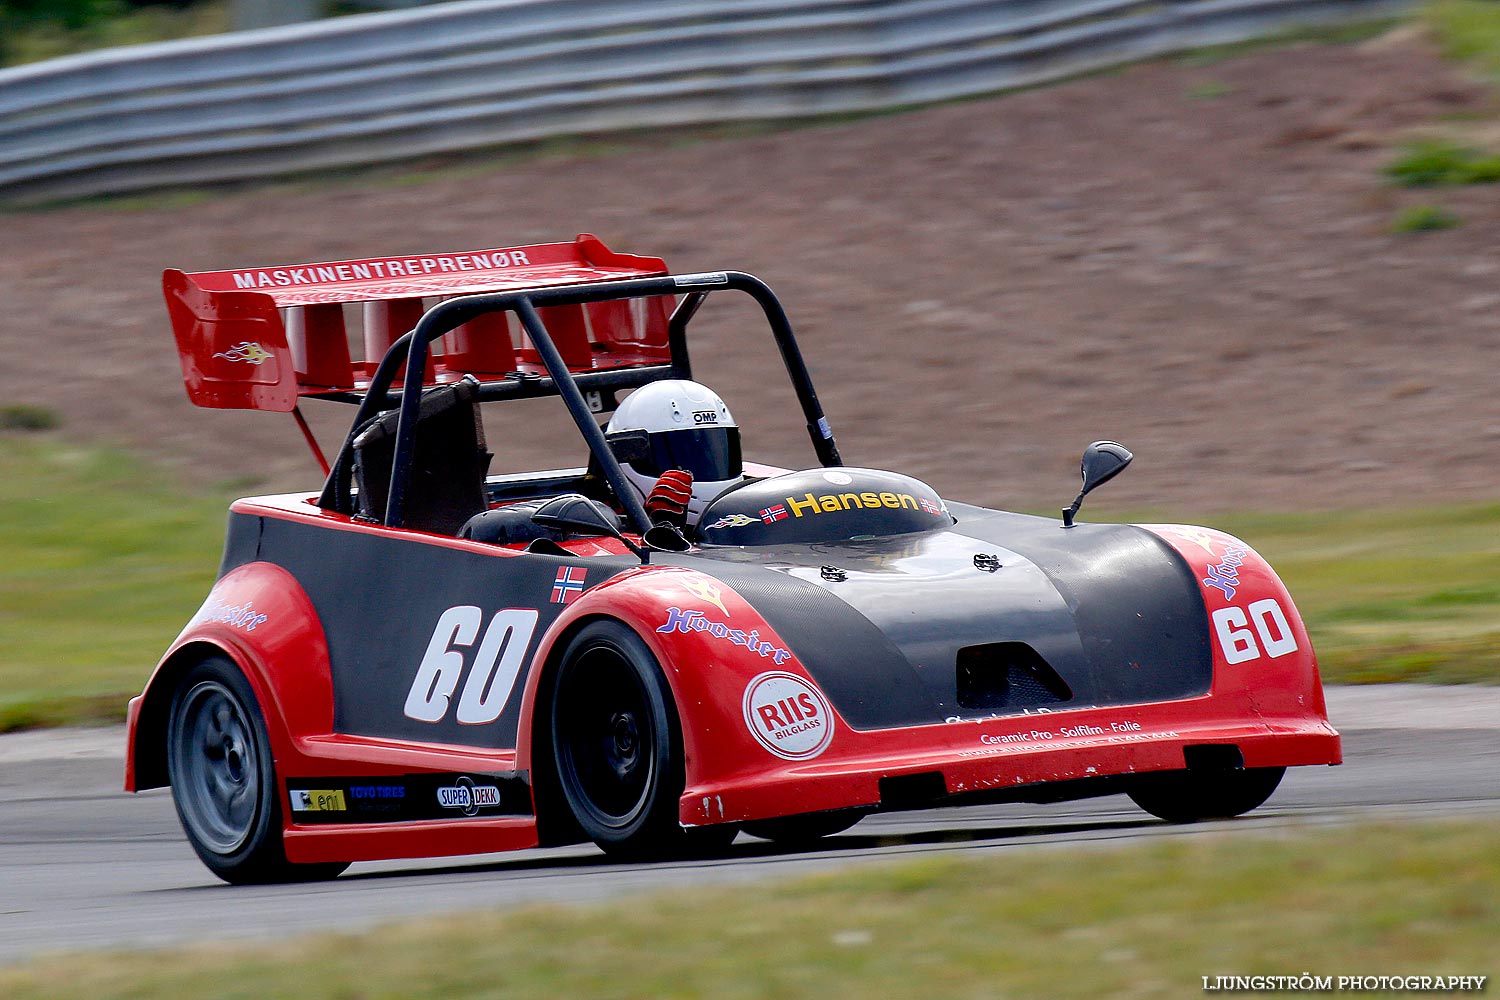 SSK Raceweek,mix,Kinnekulle Ring,Götene,Sverige,Motorsport,,2014,90450